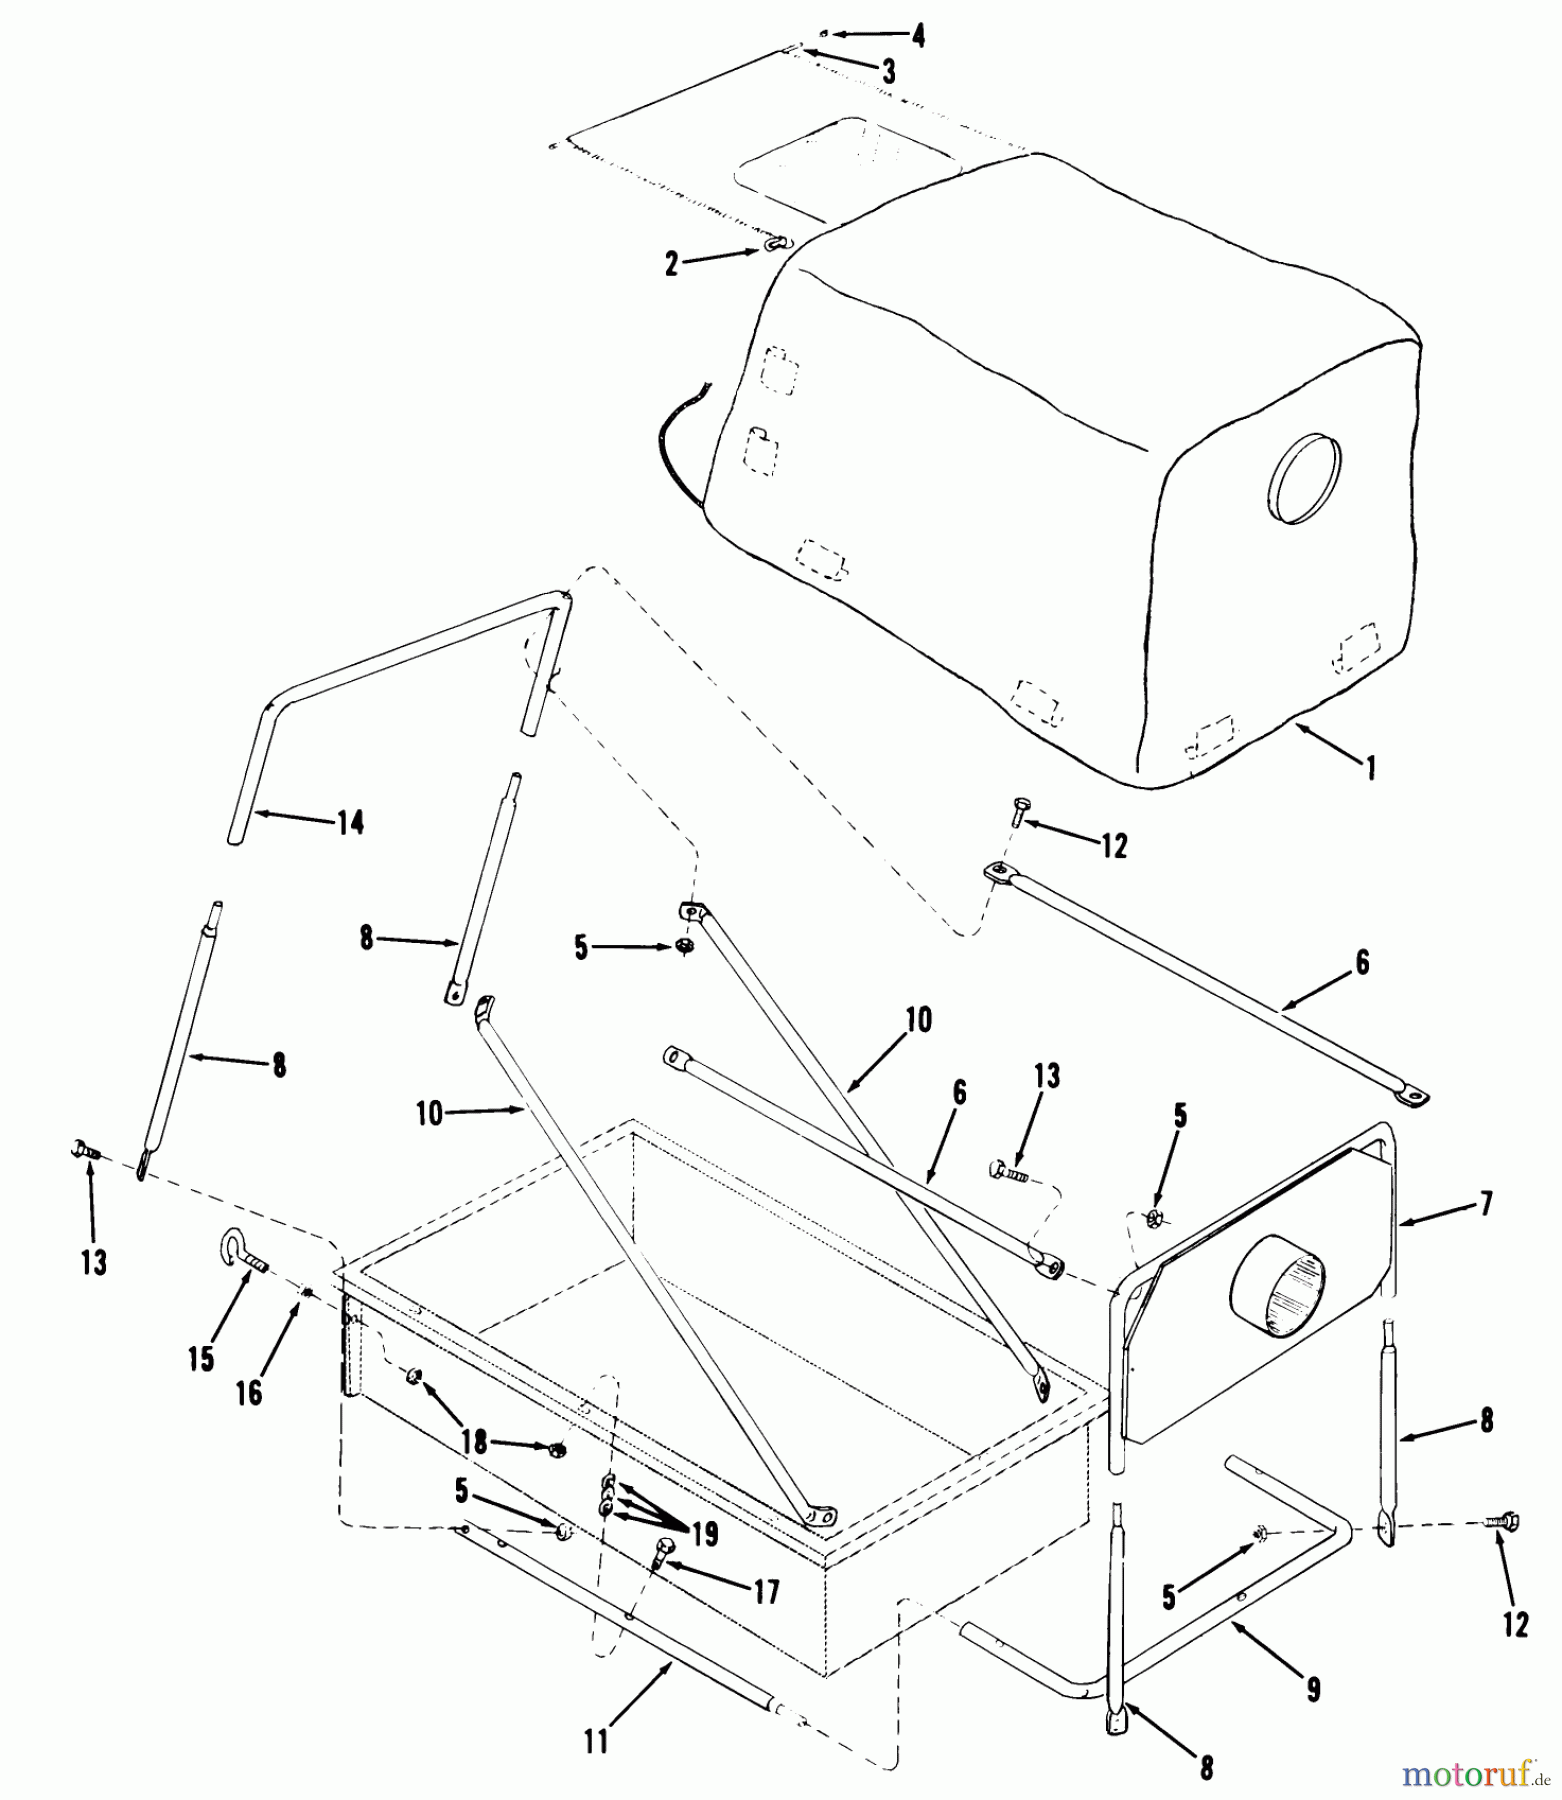  Toro Neu Accessories, Mower 97-06CL01 - Toro Rear Bagger, 1979 LAWN VACUUMS (VEHICLE IDENTIFICATION NUMBERS 97-42VX01 & 97-42VX02)